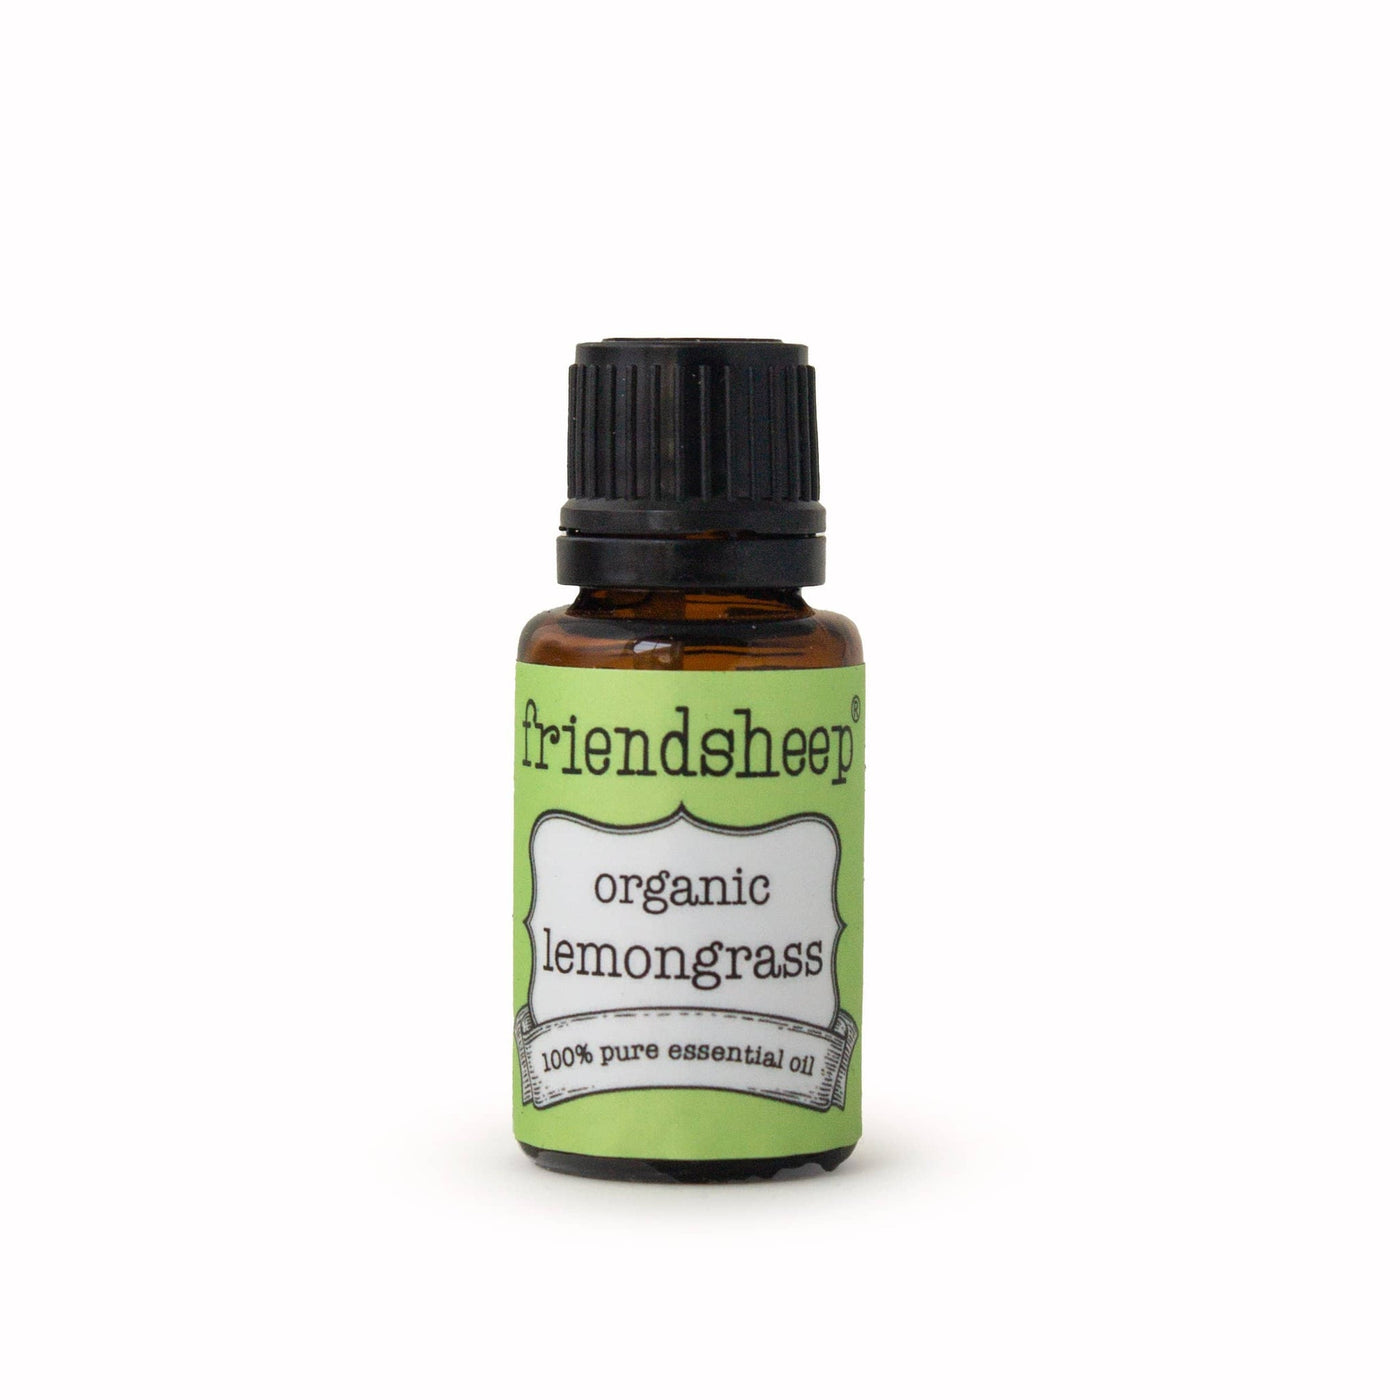 Organic Lemongrass Essential Oil by Friendsheep